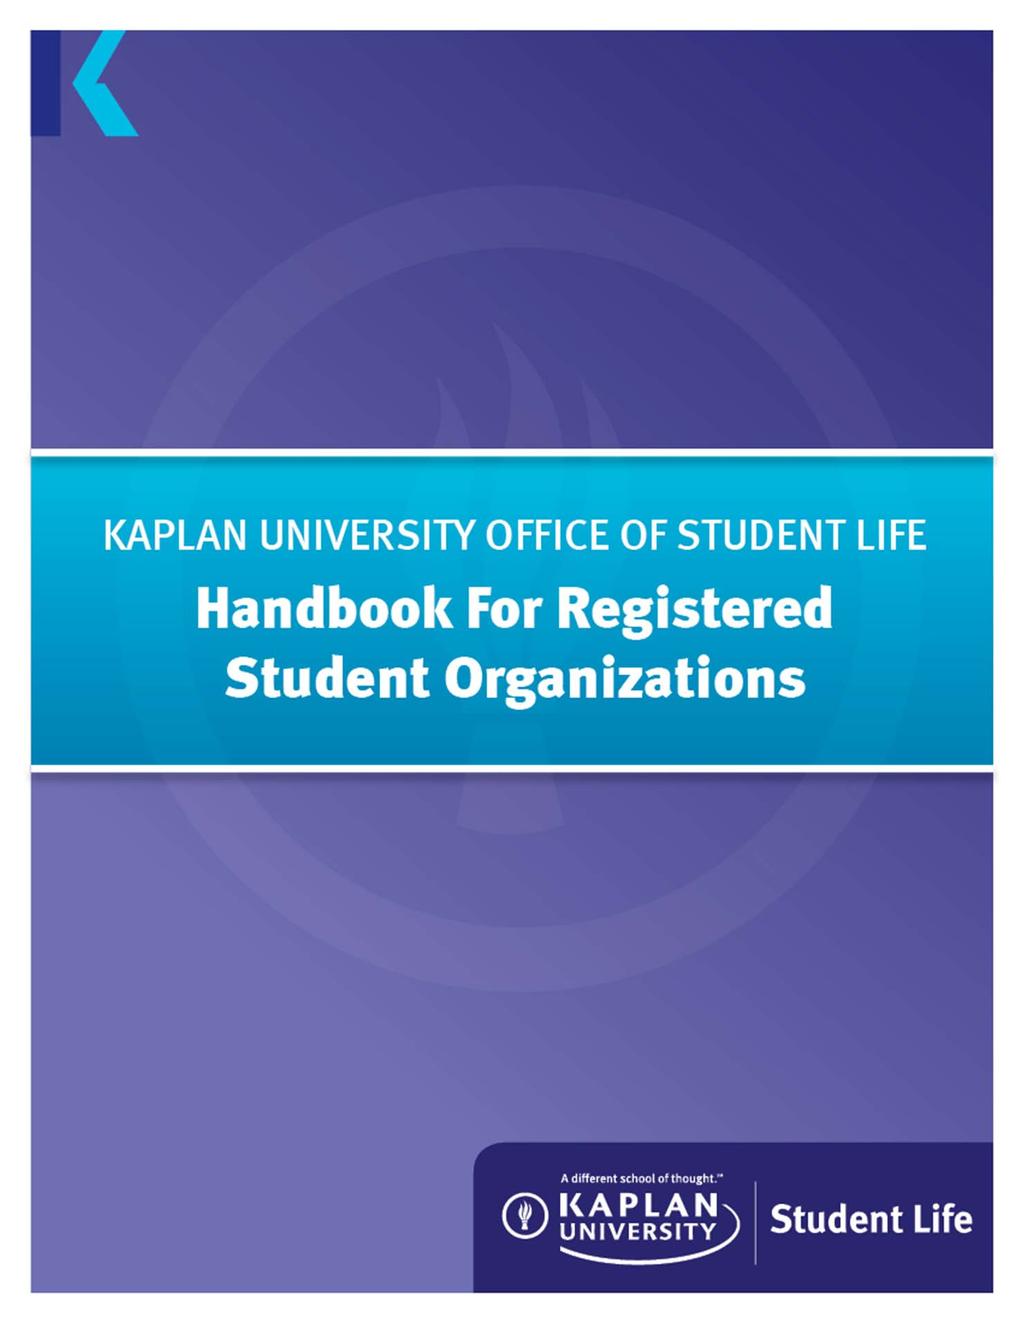 KAPLAN UNIVERSITY OFFICE OF STUDENT LIFE